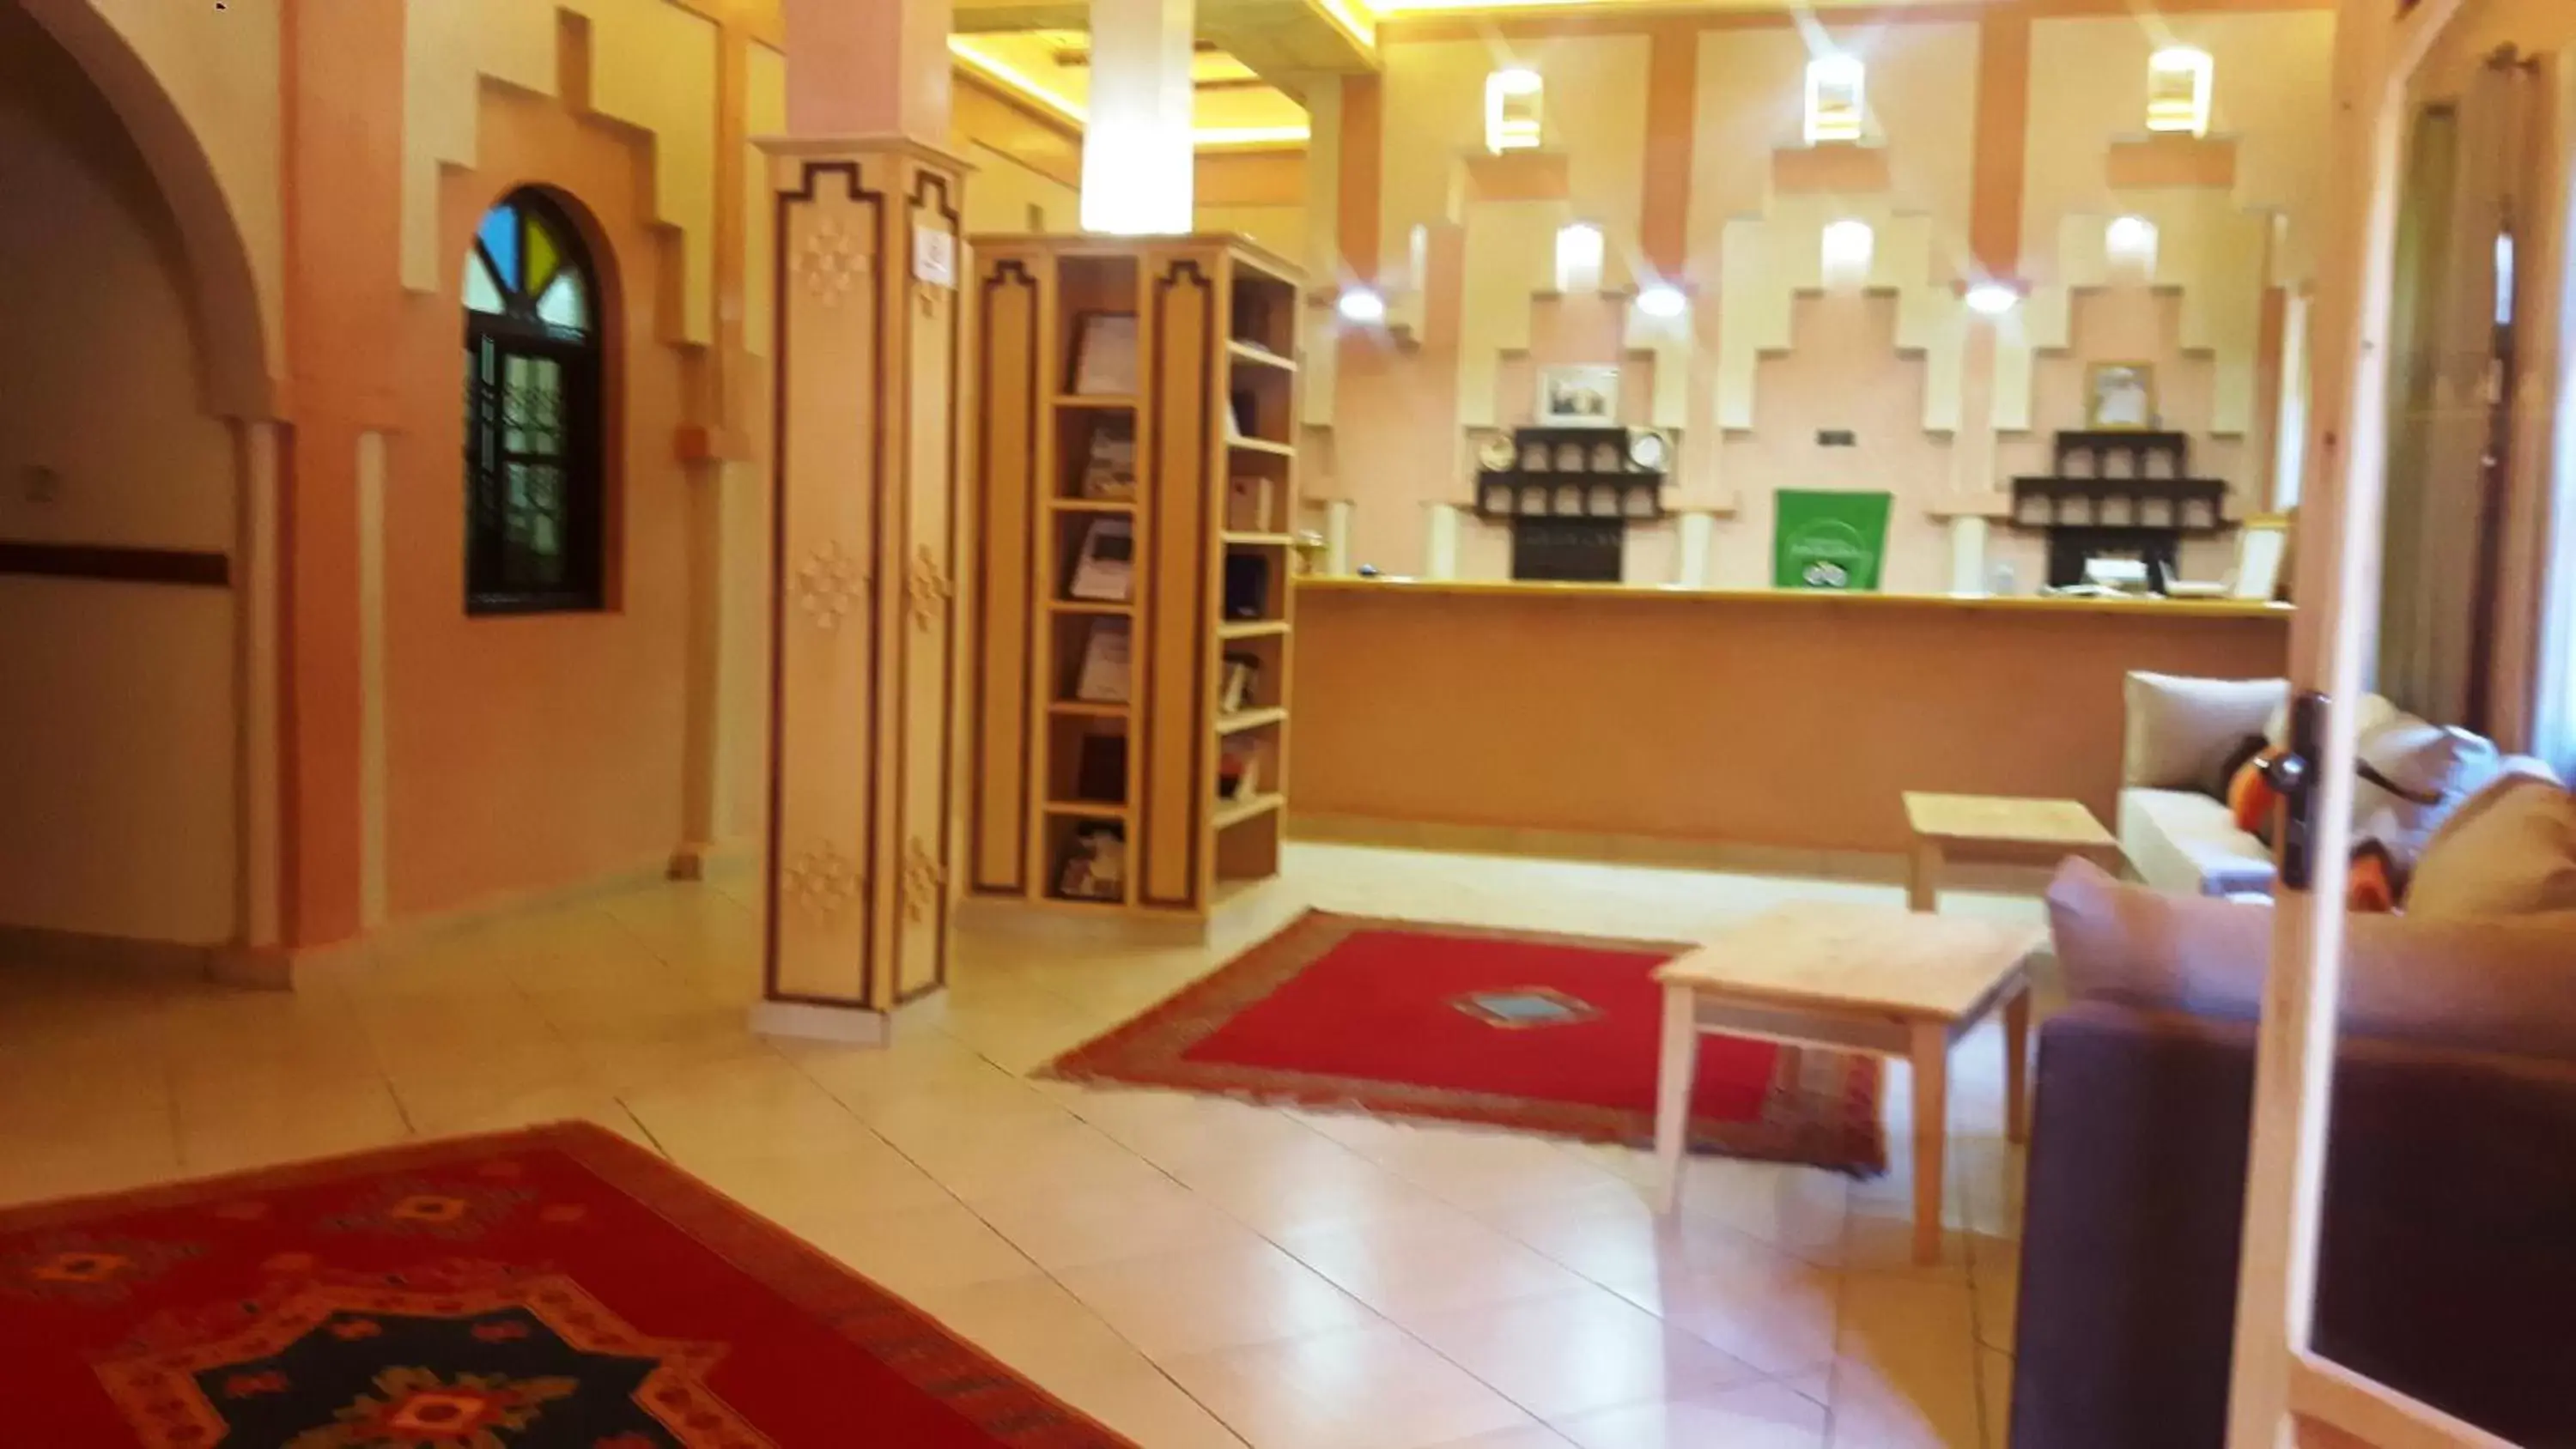 Lobby or reception in Kasbah Sirocco